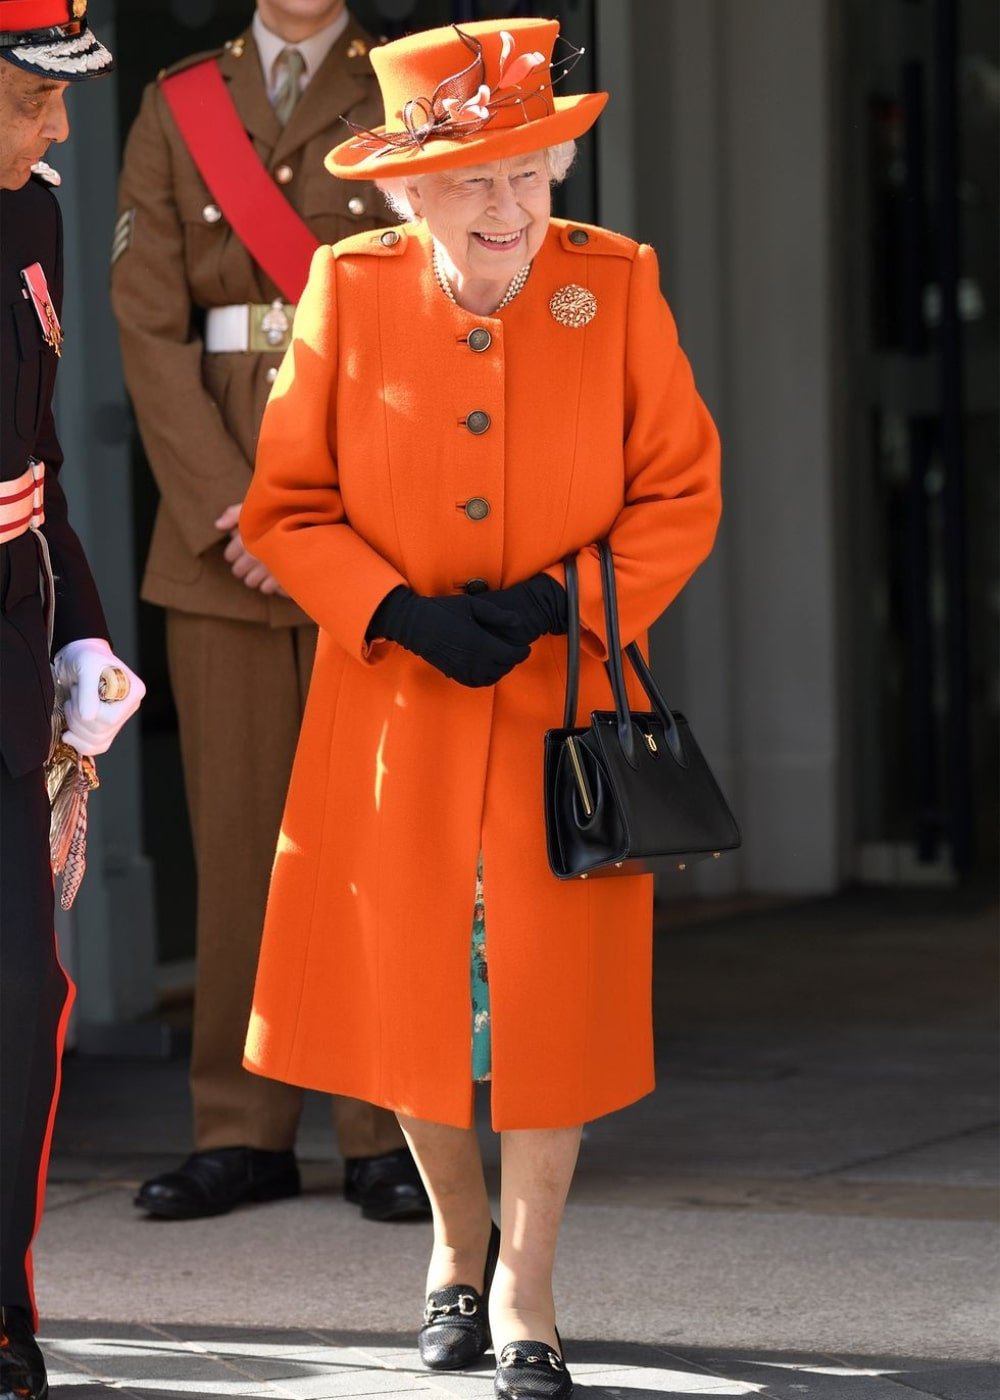 Rainha Elizabeth II - conjunto de alfaiataria laranja, chapéu e luvas pretas - Rainha Elizabeth II - Outono - andando na rua - https://stealthelook.com.br